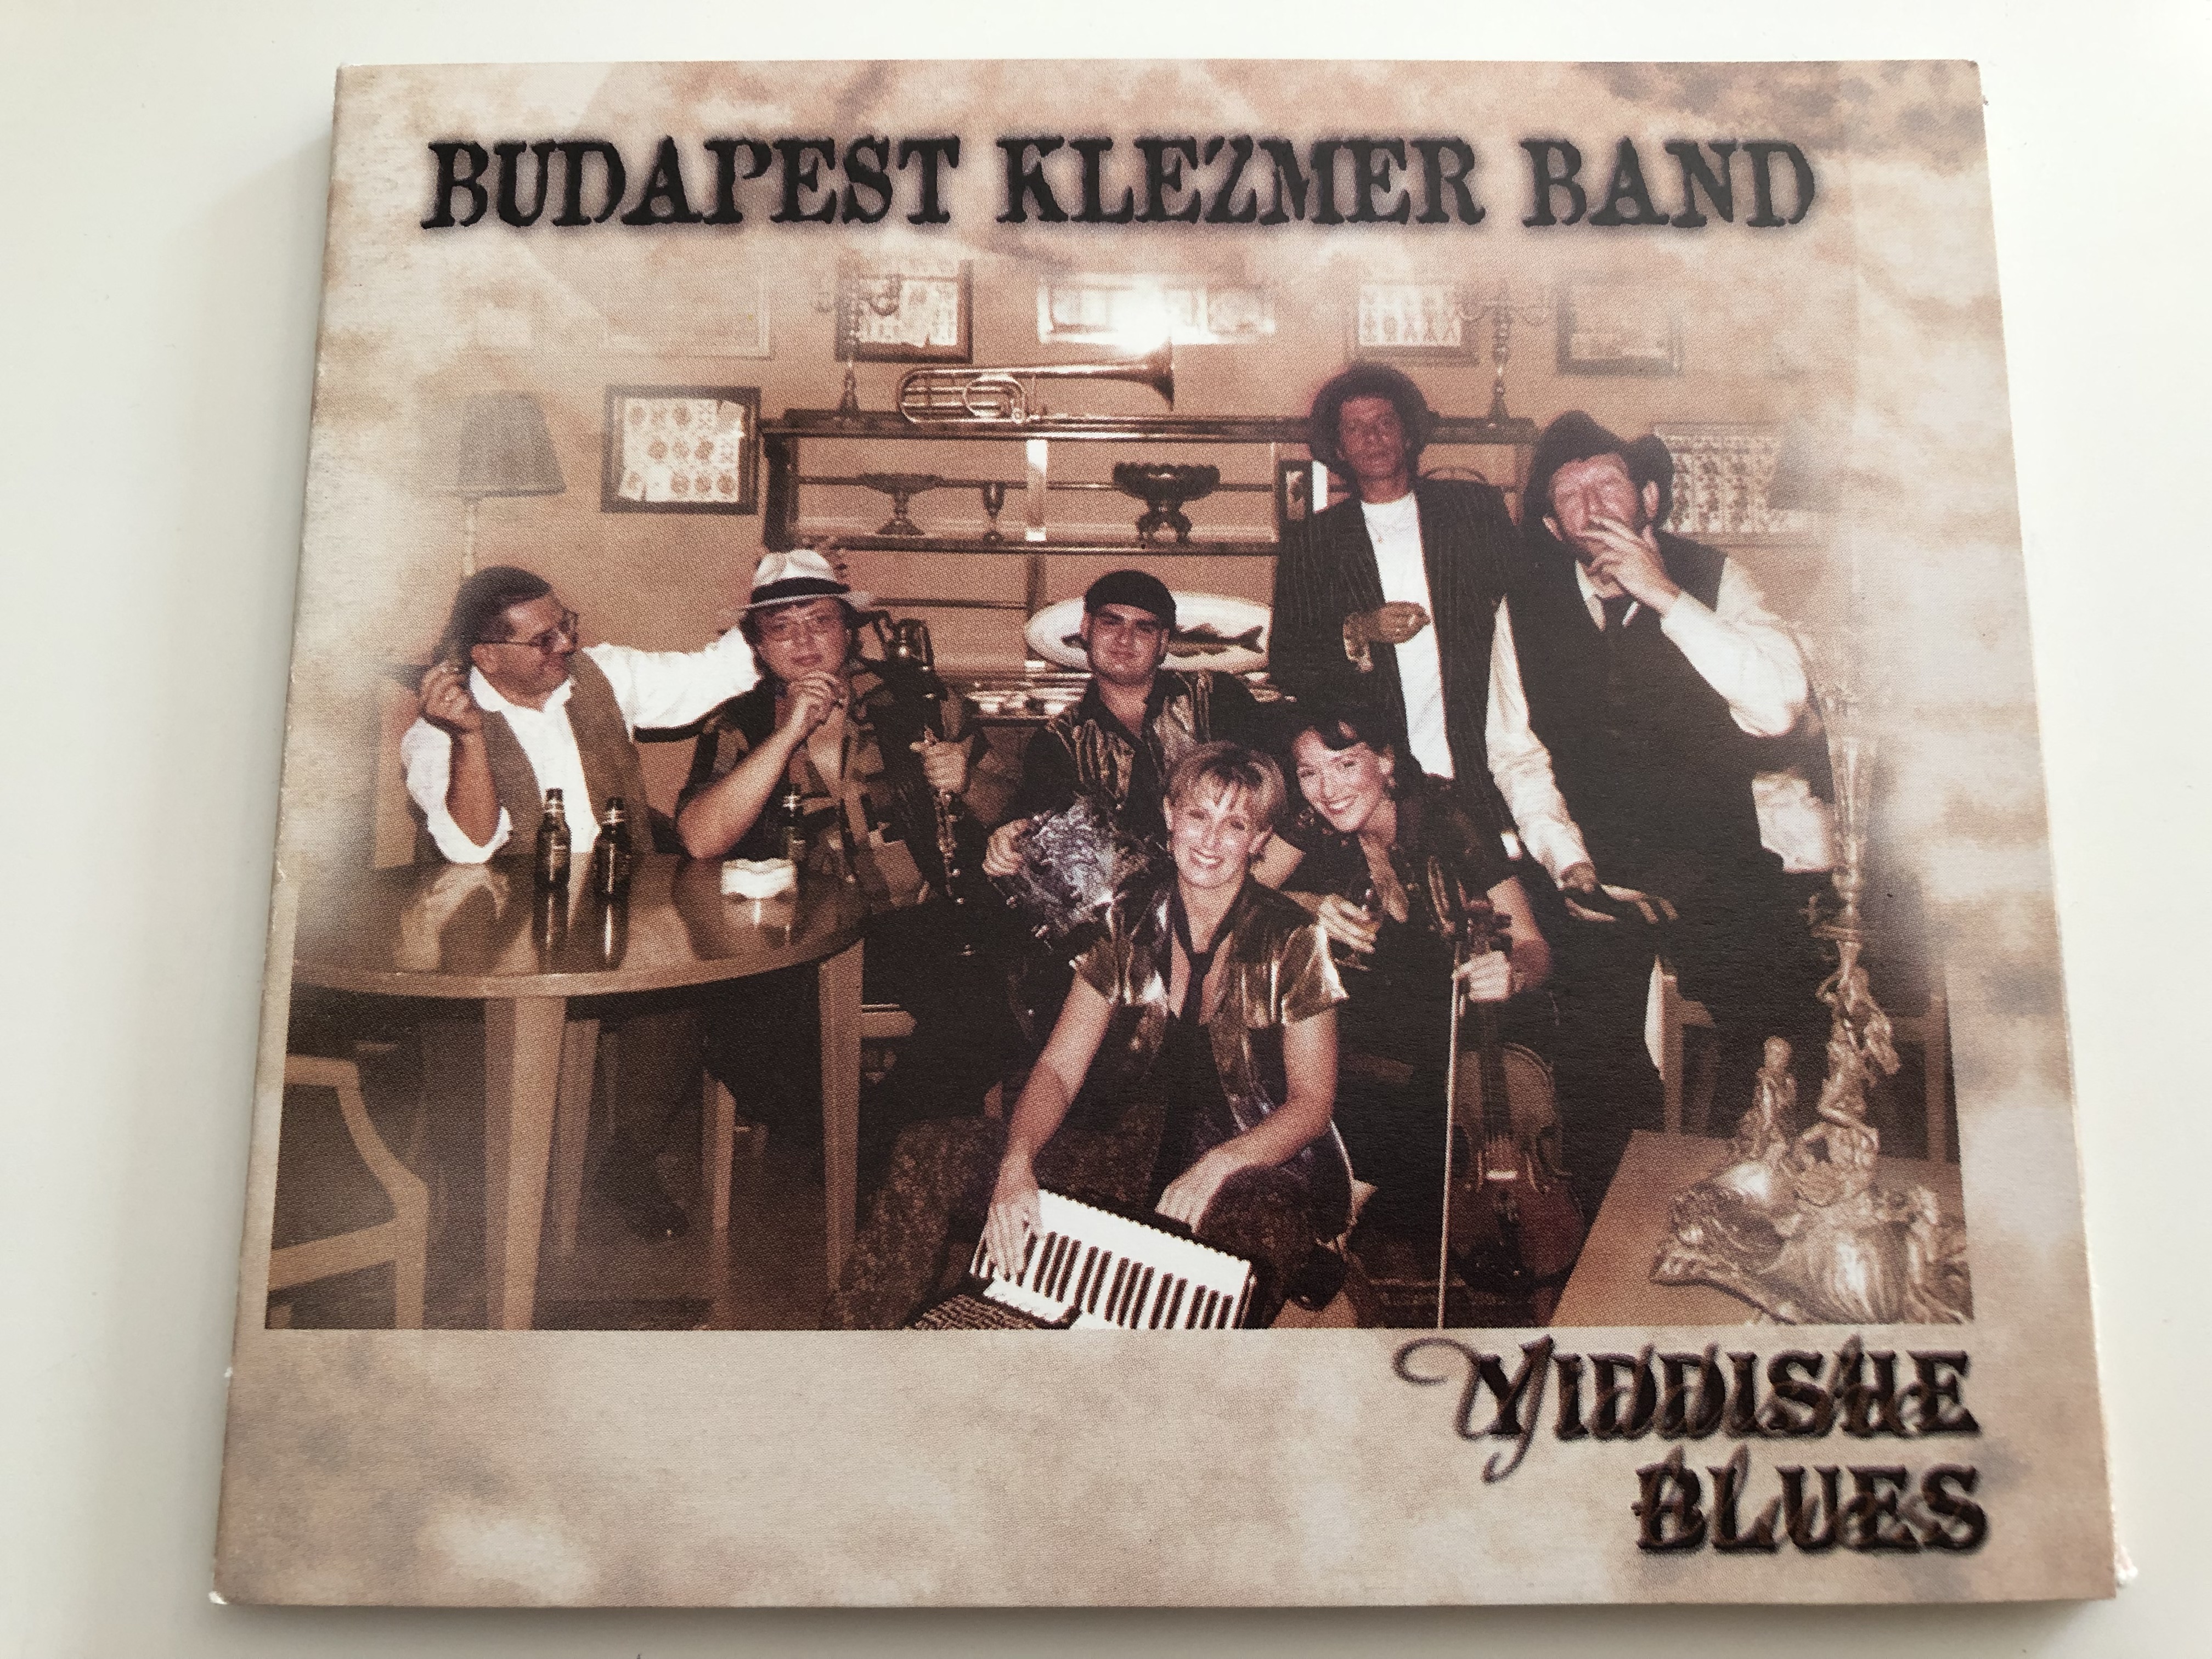 budapest-klezmer-band-yiddishe-blues-ferenc-j-vori-istv-n-koh-n-katica-ill-nyi-anna-nagy-g-bor-tam-s-g-bor-kiss-bal-zs-v-gh-audio-cd-1-.jpg